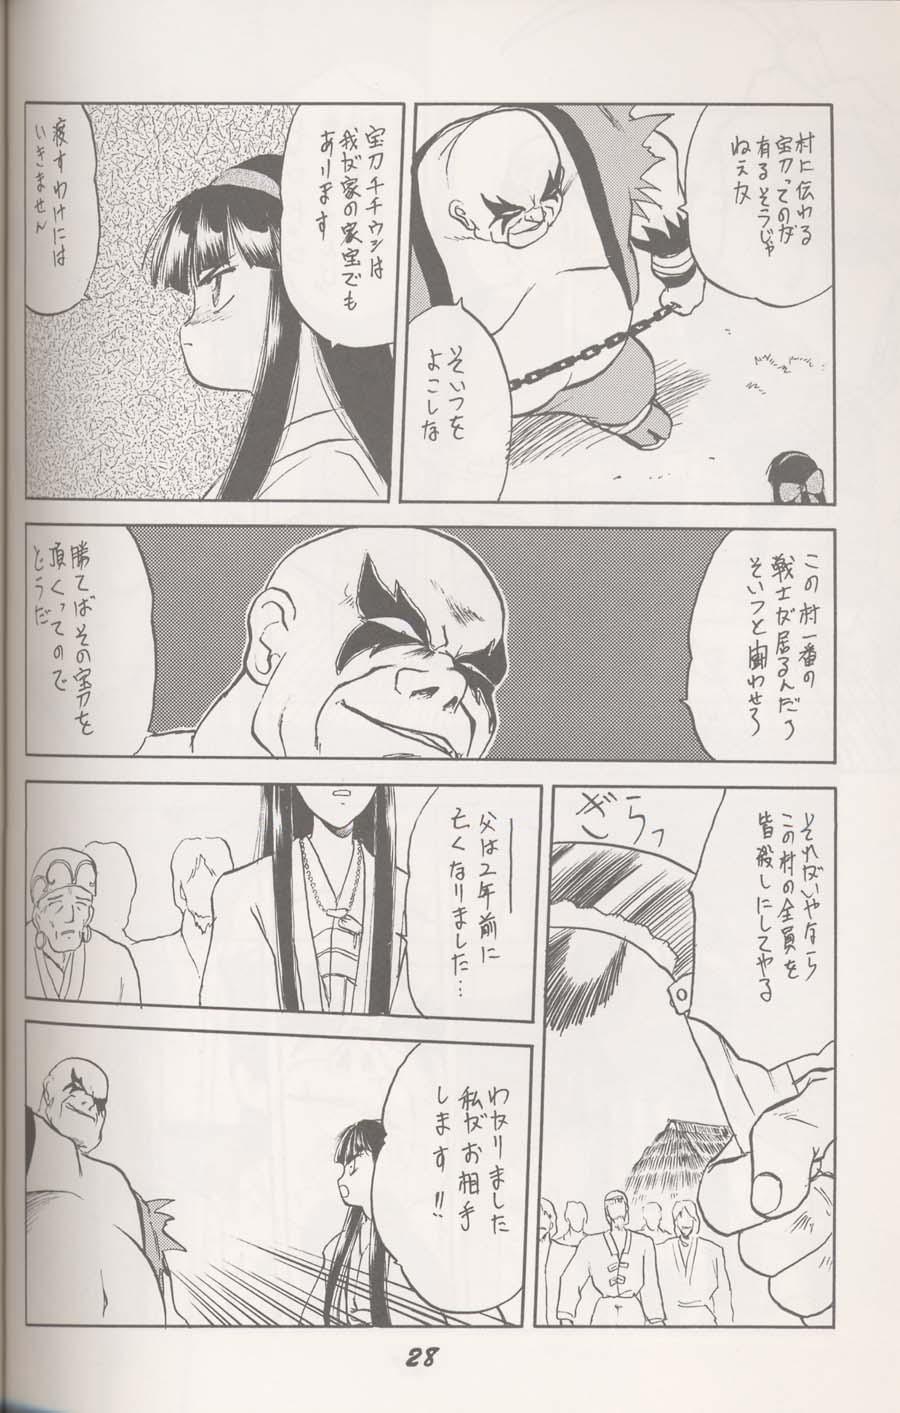 Sloppy Blow Job ヌプル メノコ ナコルル - Samurai spirits Glam - Page 3